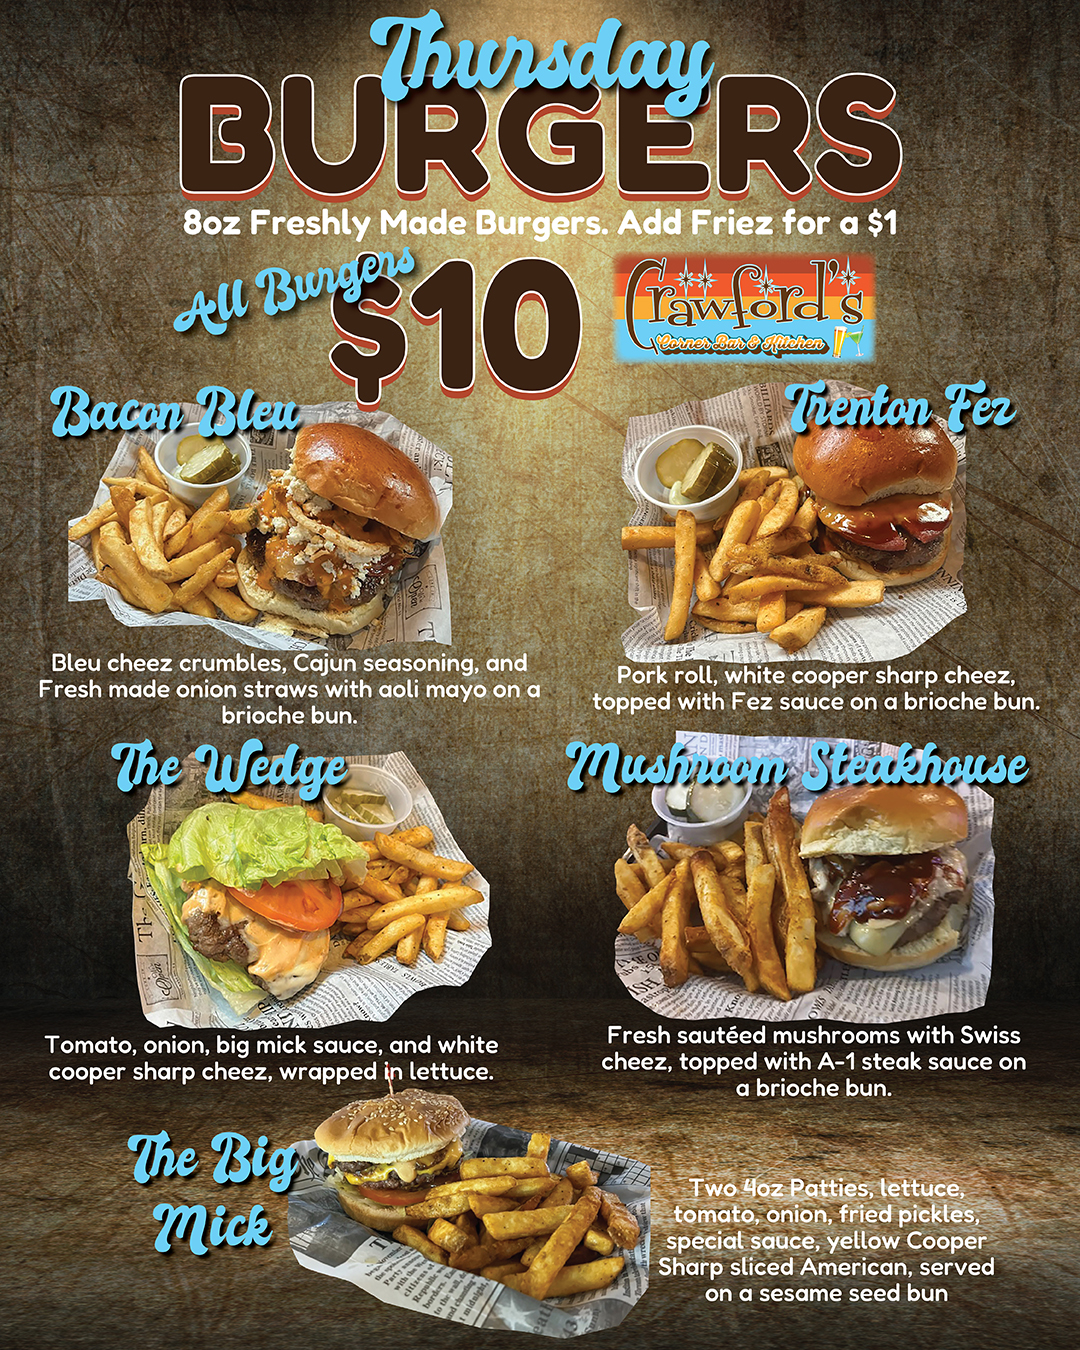 Thursday burgers menu.